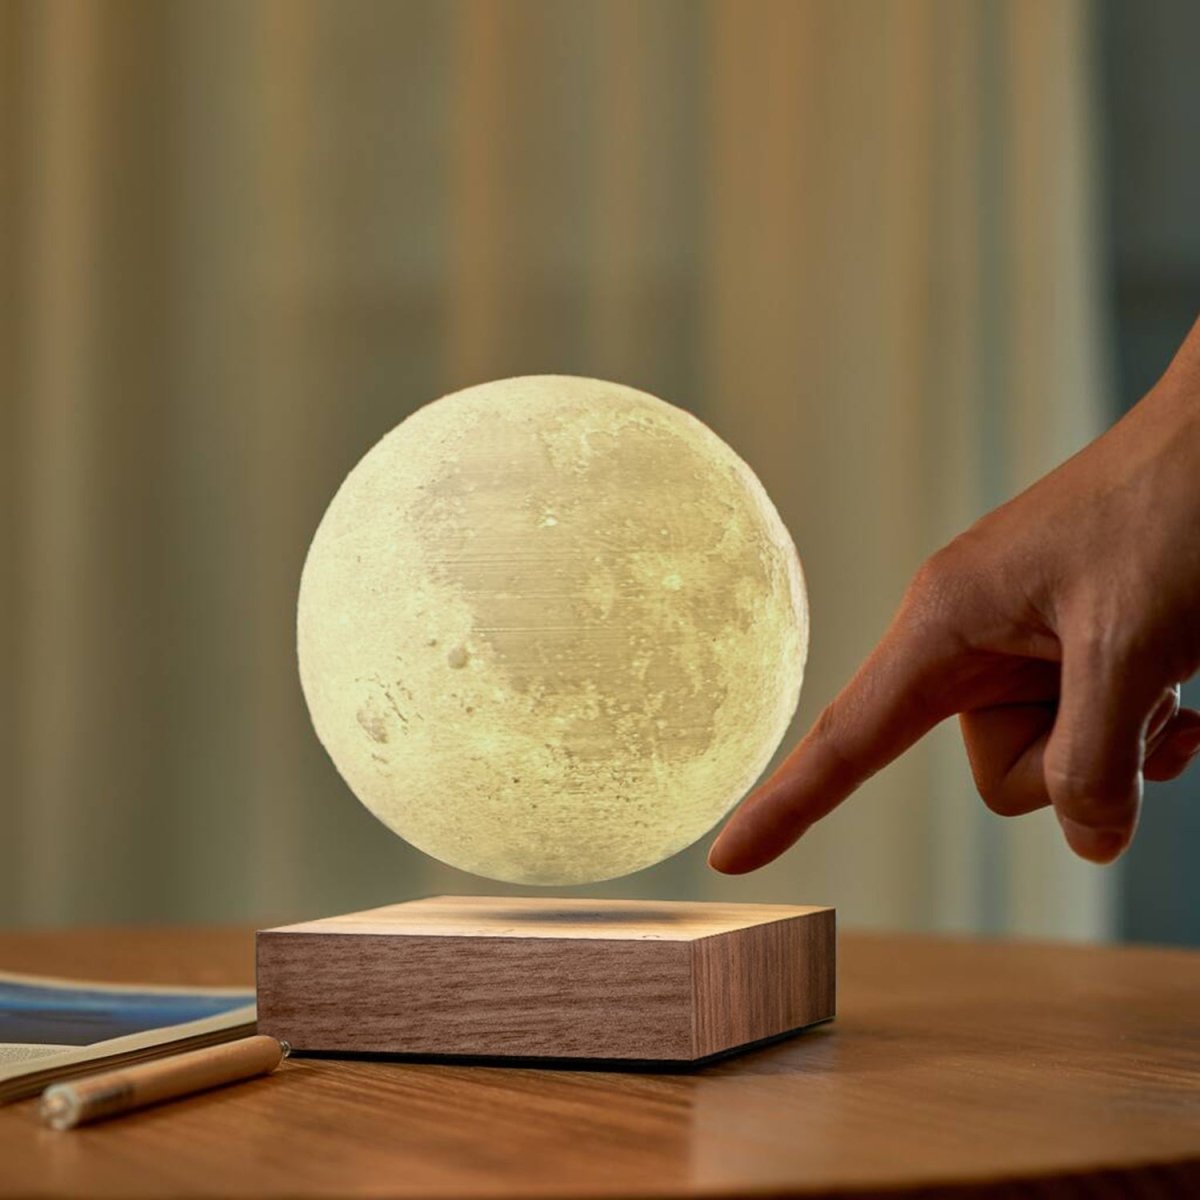 Kagura® Moon Lamp Shipment Protected by InsureShield™